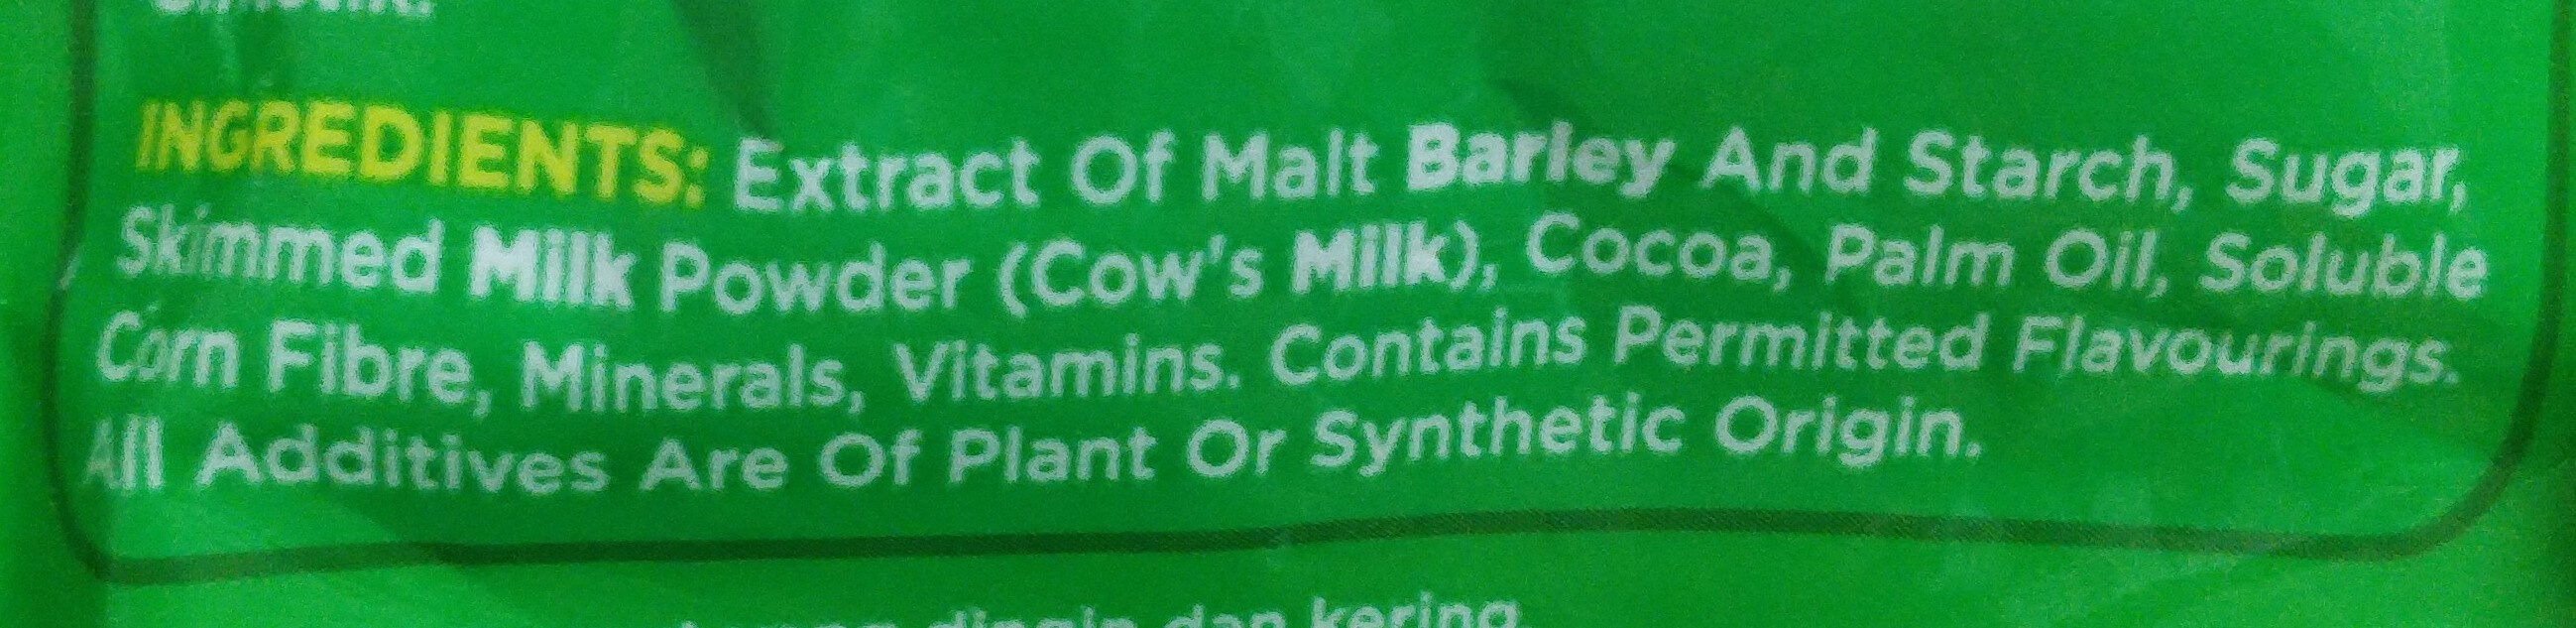 Milo 3 in 1 - Ingredients